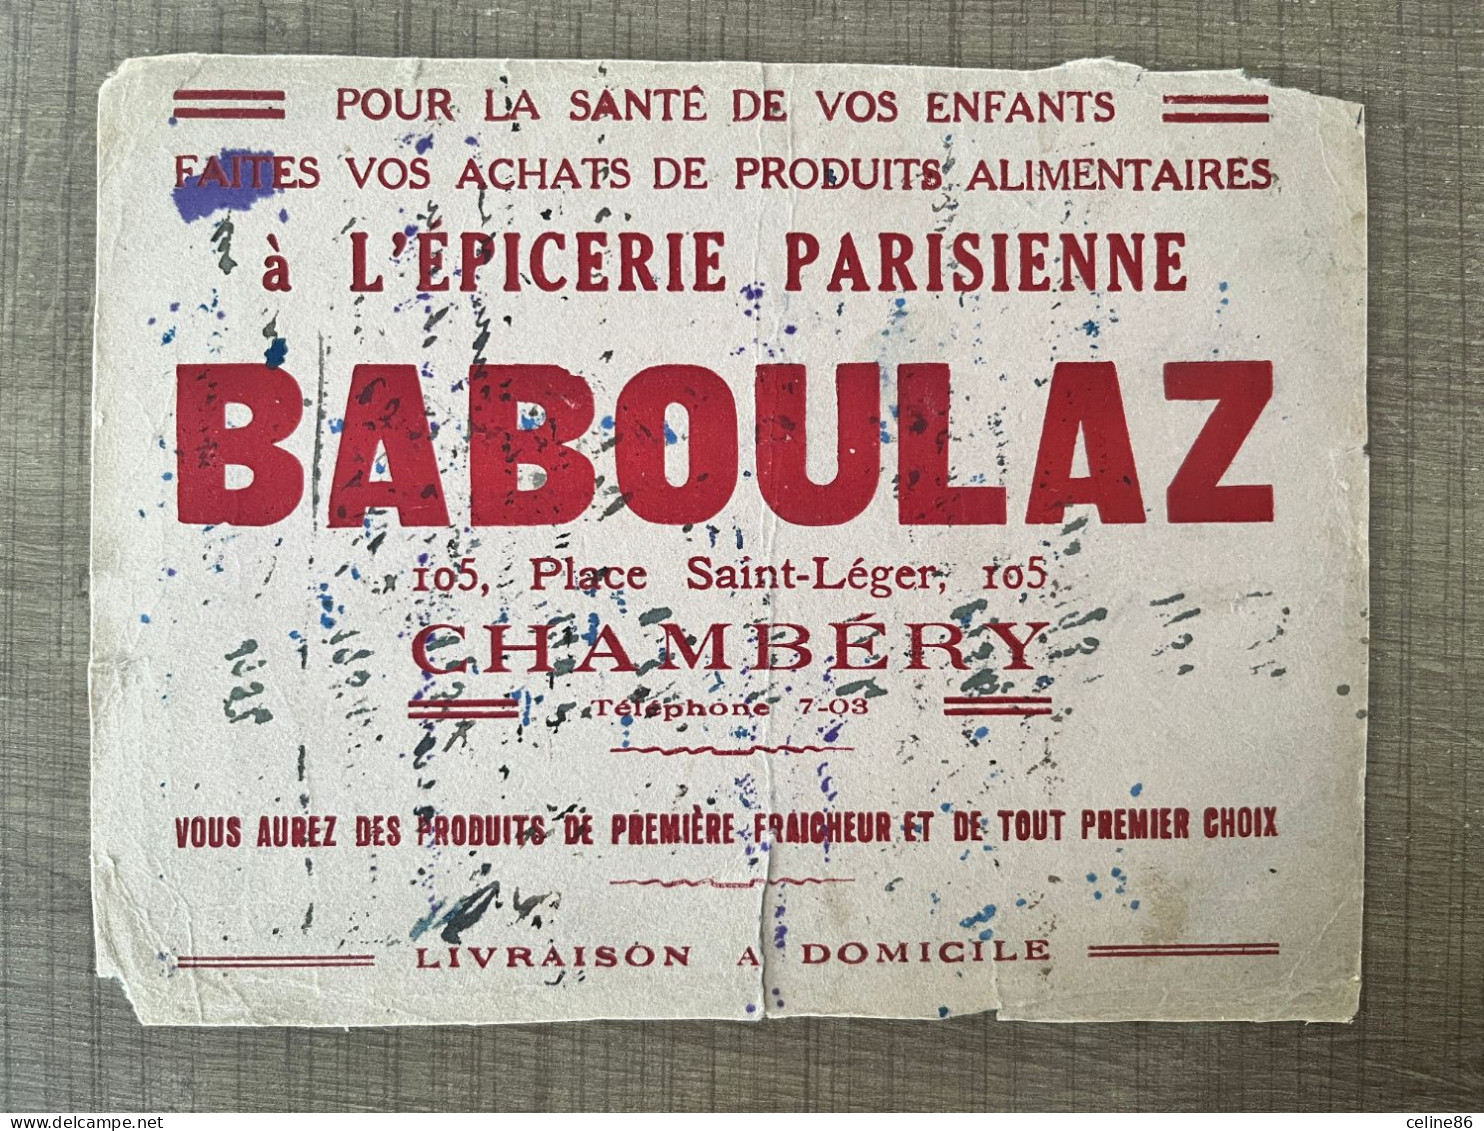 épicerie Parisienne BABOULAZ - Lebensmittel